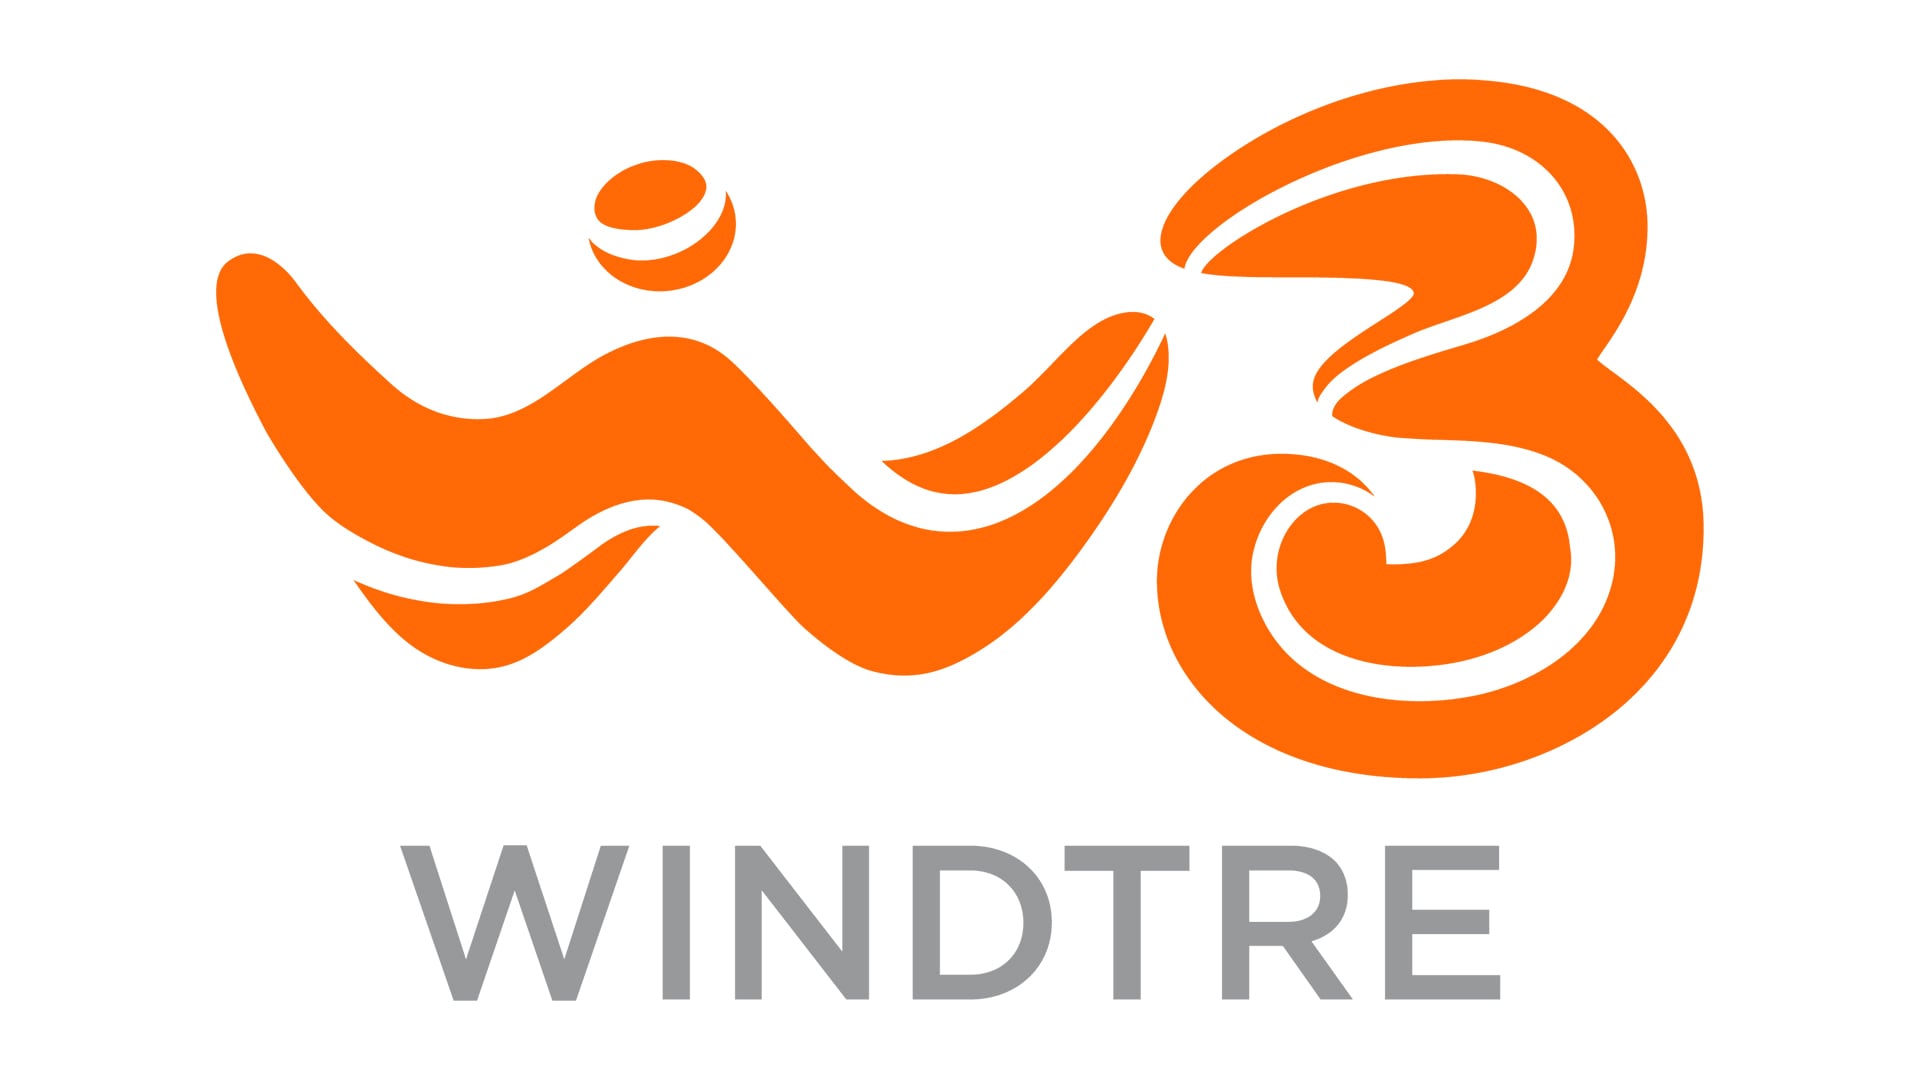 Wind 3 Brand Logo